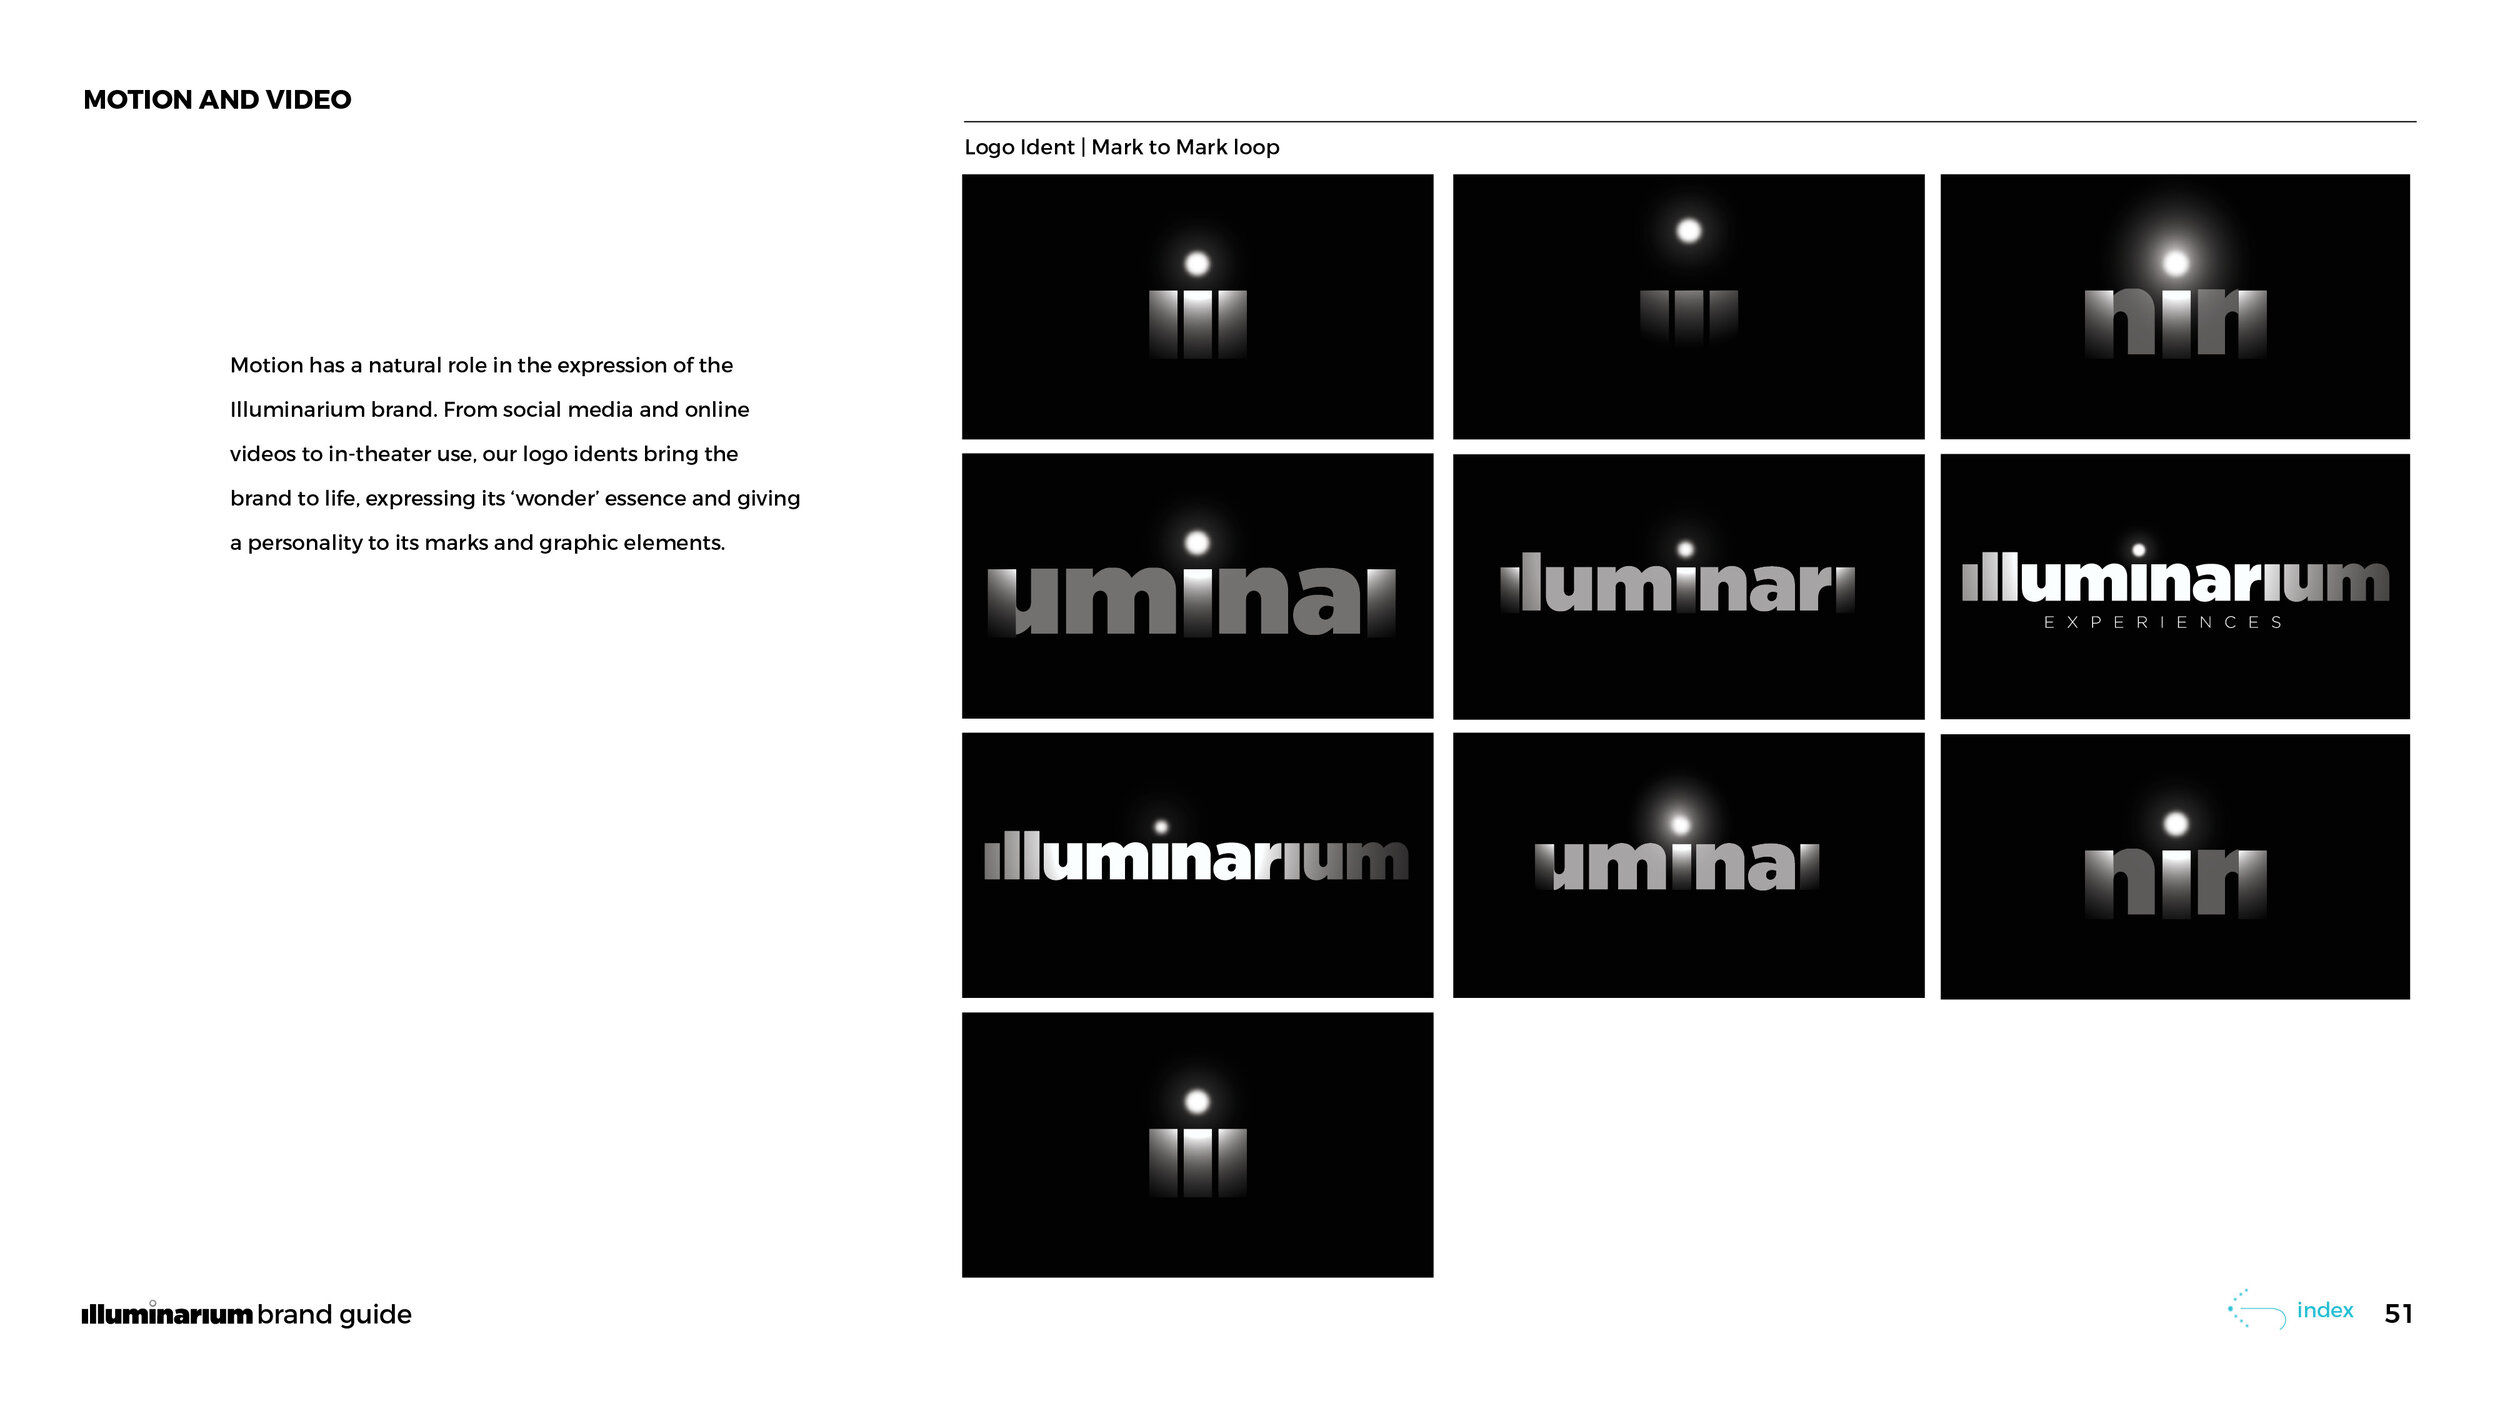 illuminarium_brand guide_16:9_May2020GD_final51.jpg